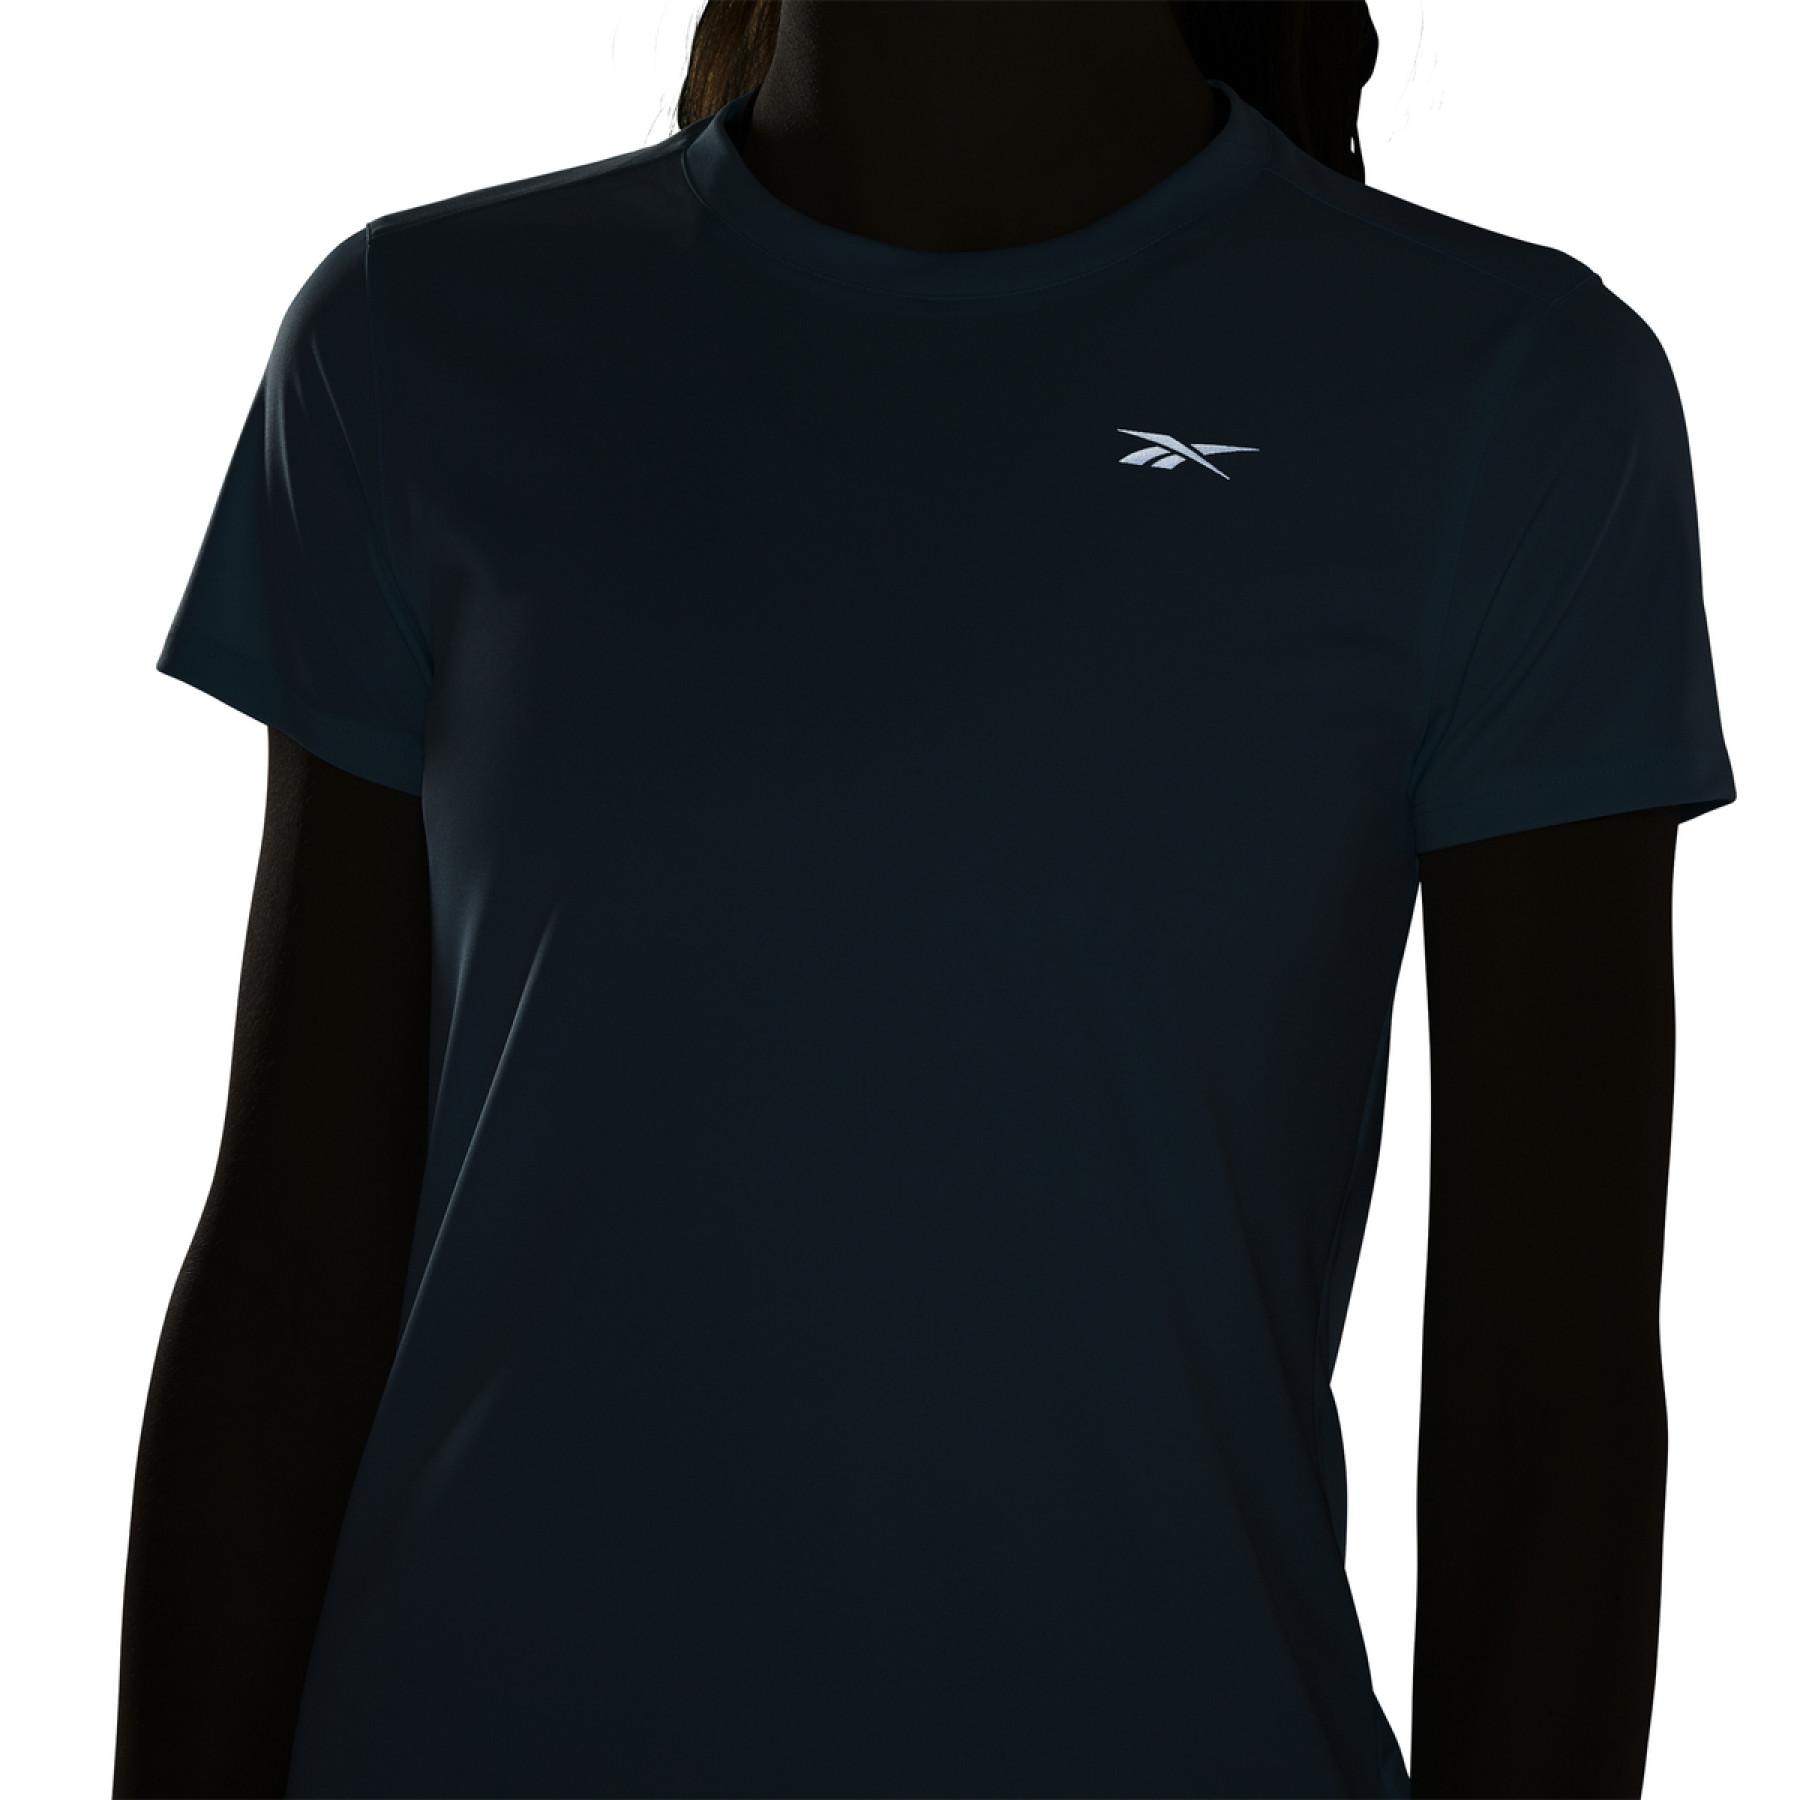 Camiseta de mujer Reebok Running Windsprint